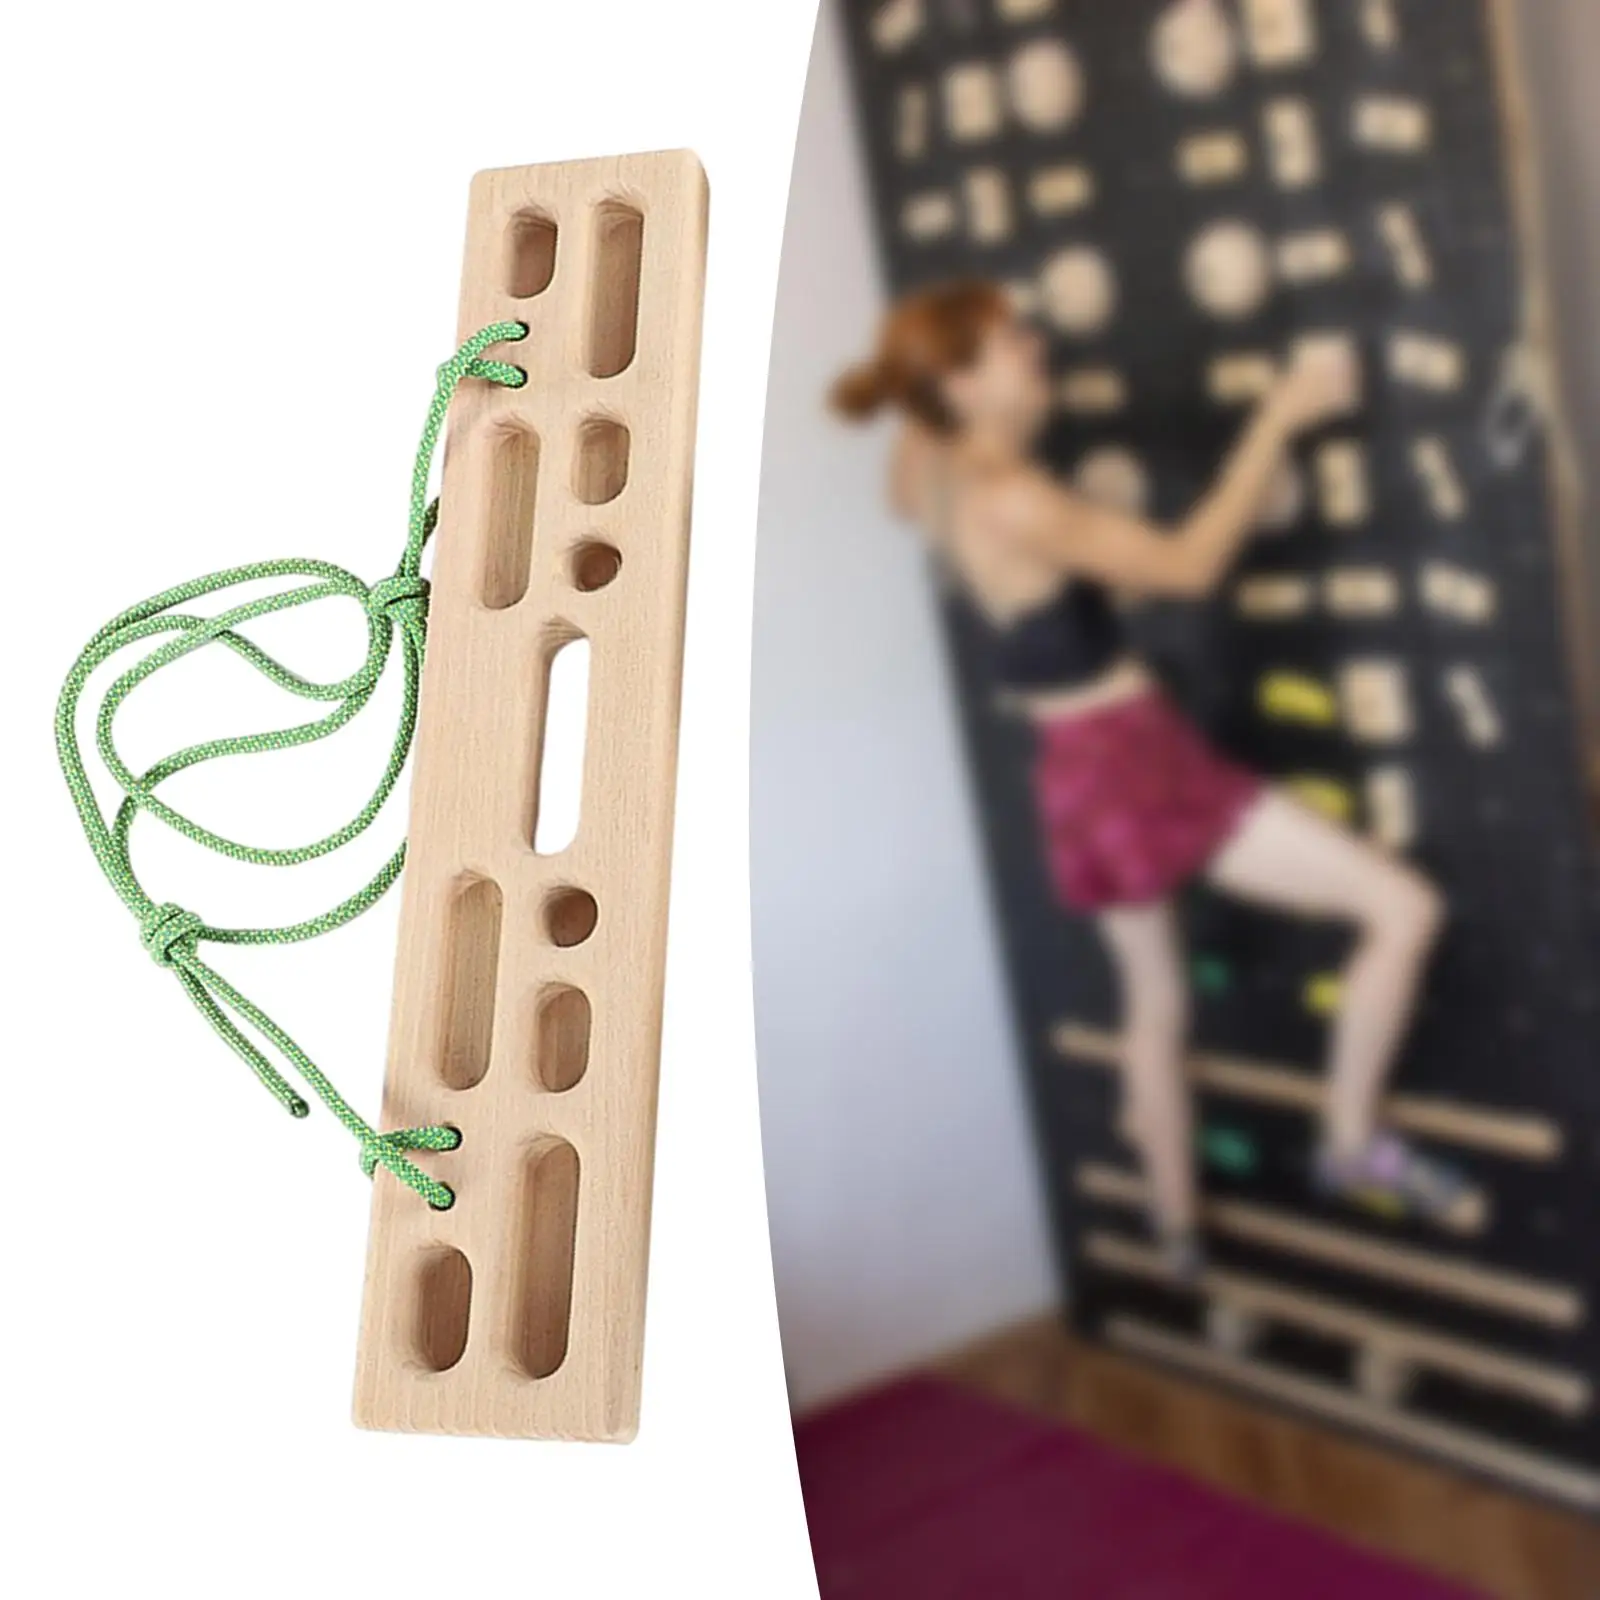 Climbing Hangboard, 50cmx10cm Climbing Fingerboard, Rock Climbing Training Aid Pull up Board Hang Board for Indoor, Athletes